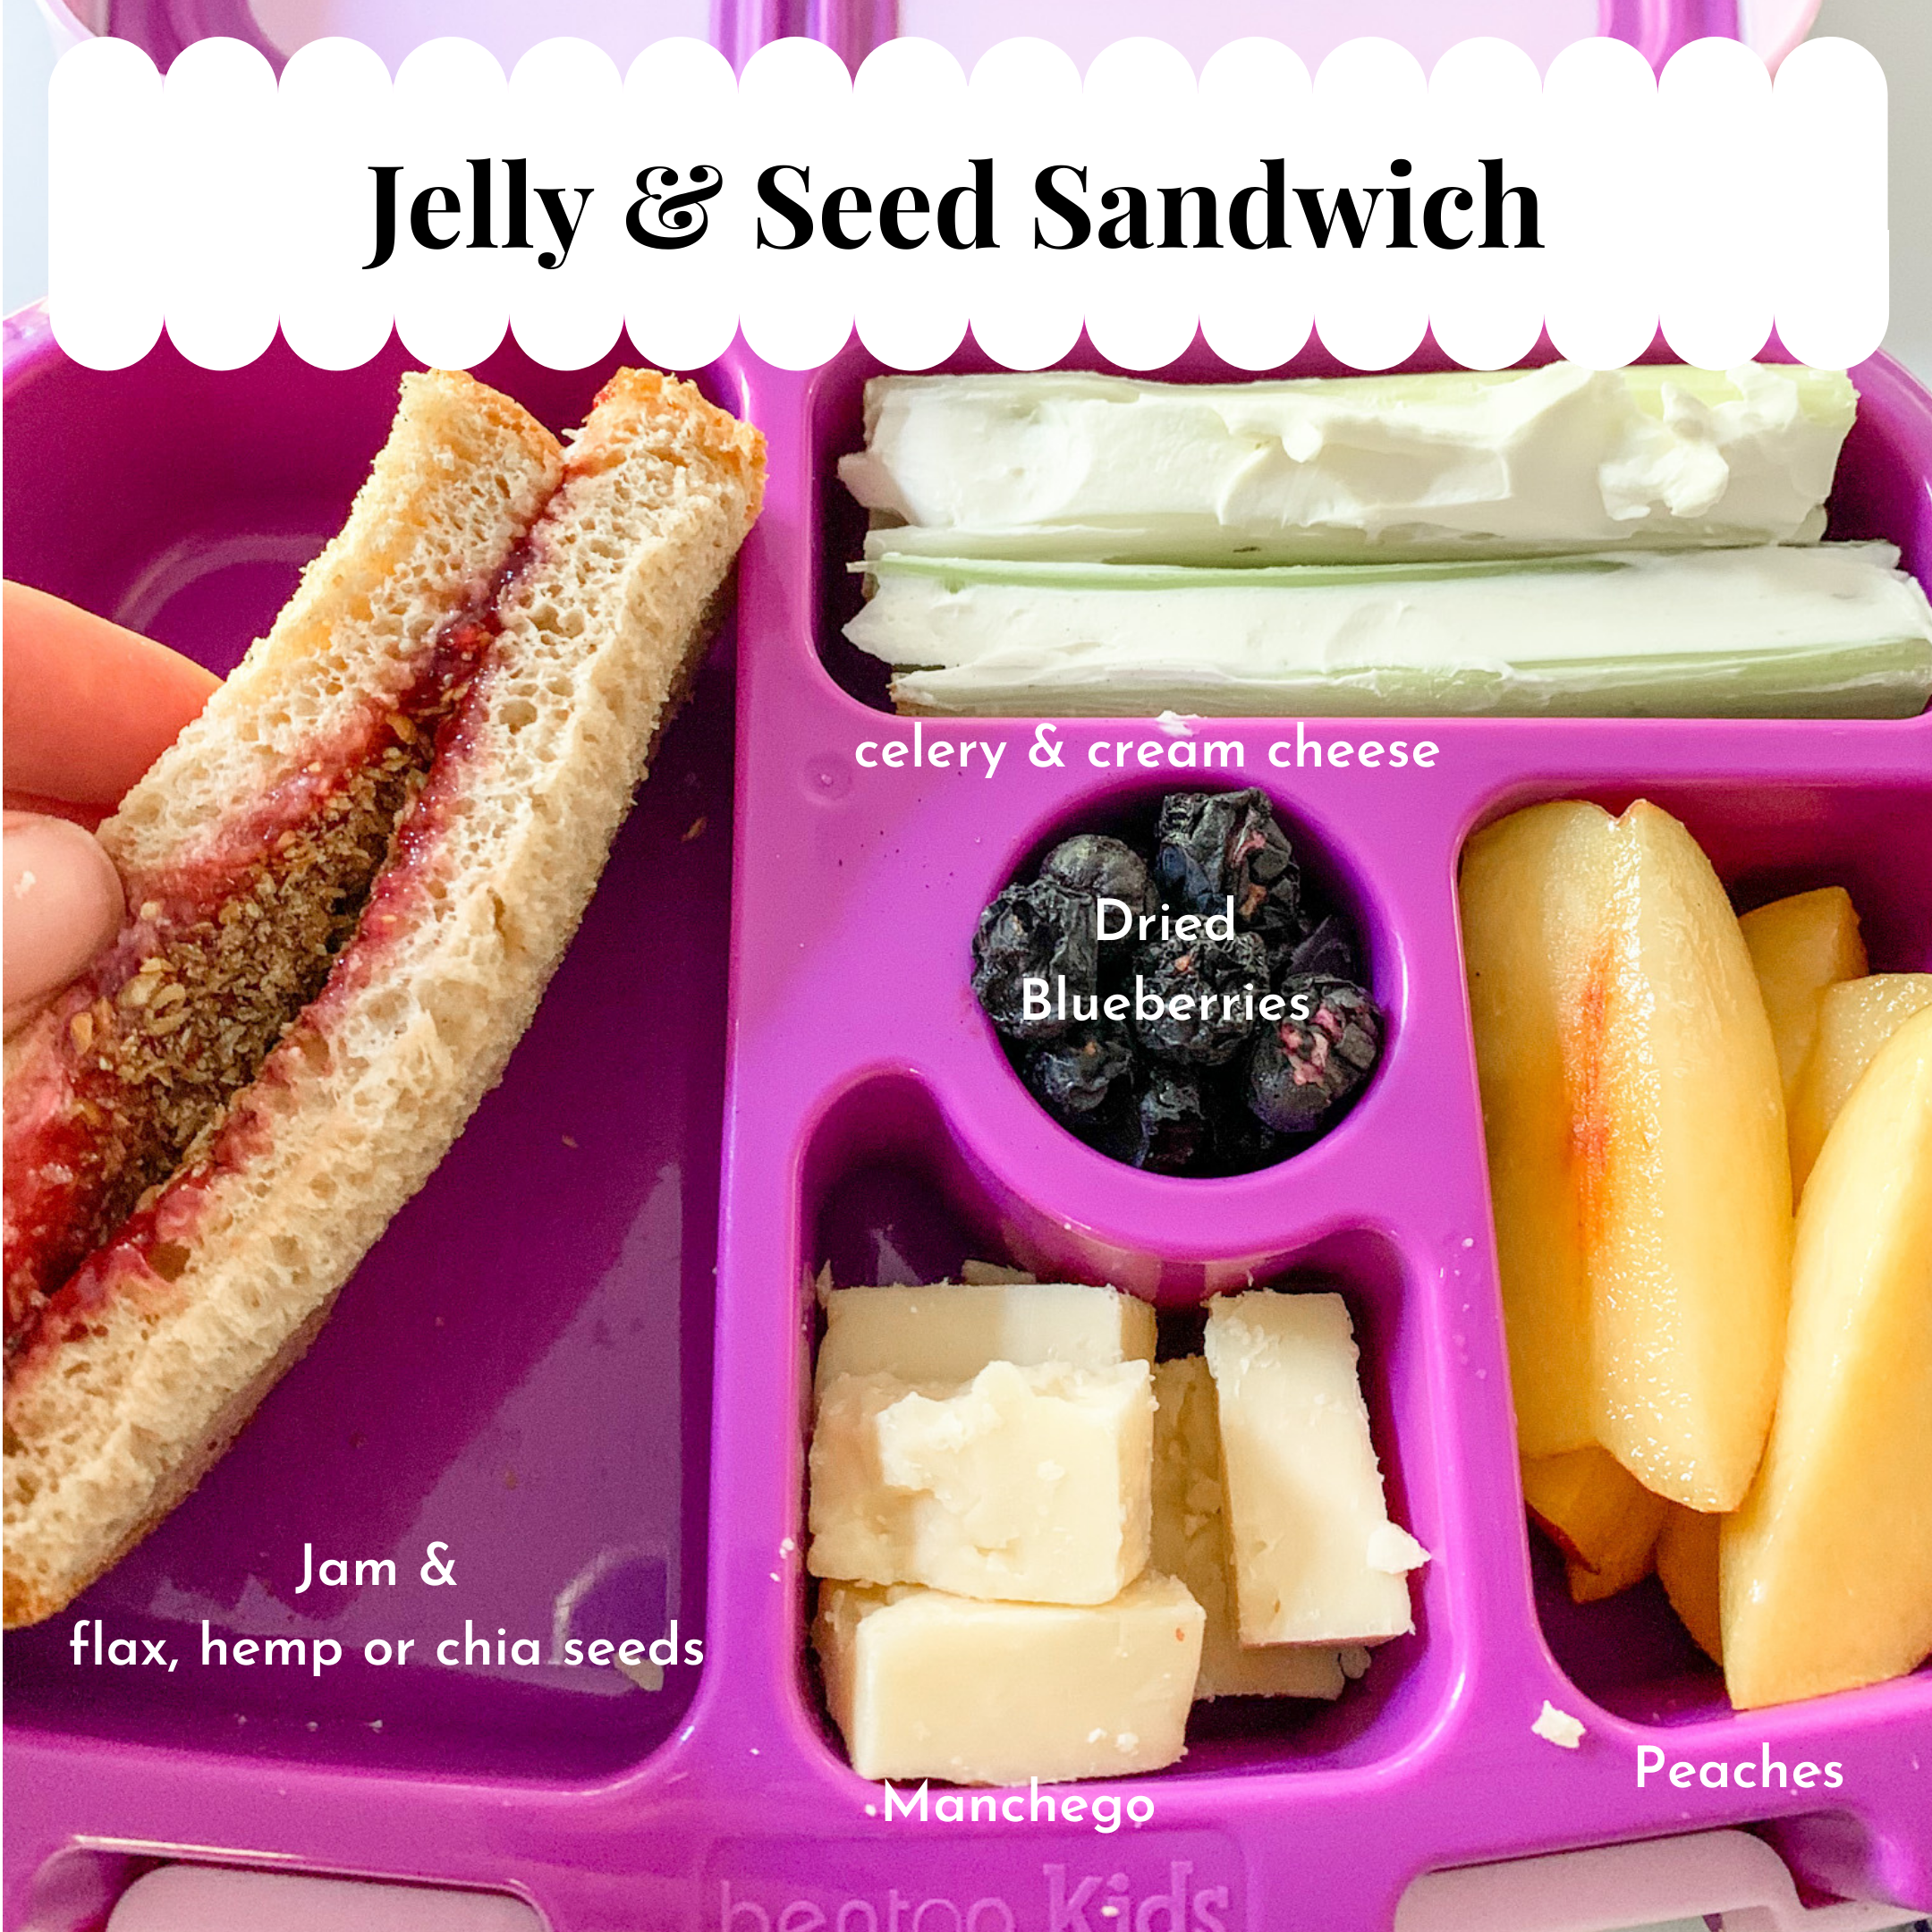 Jelly & Seed Sandwich - Photo